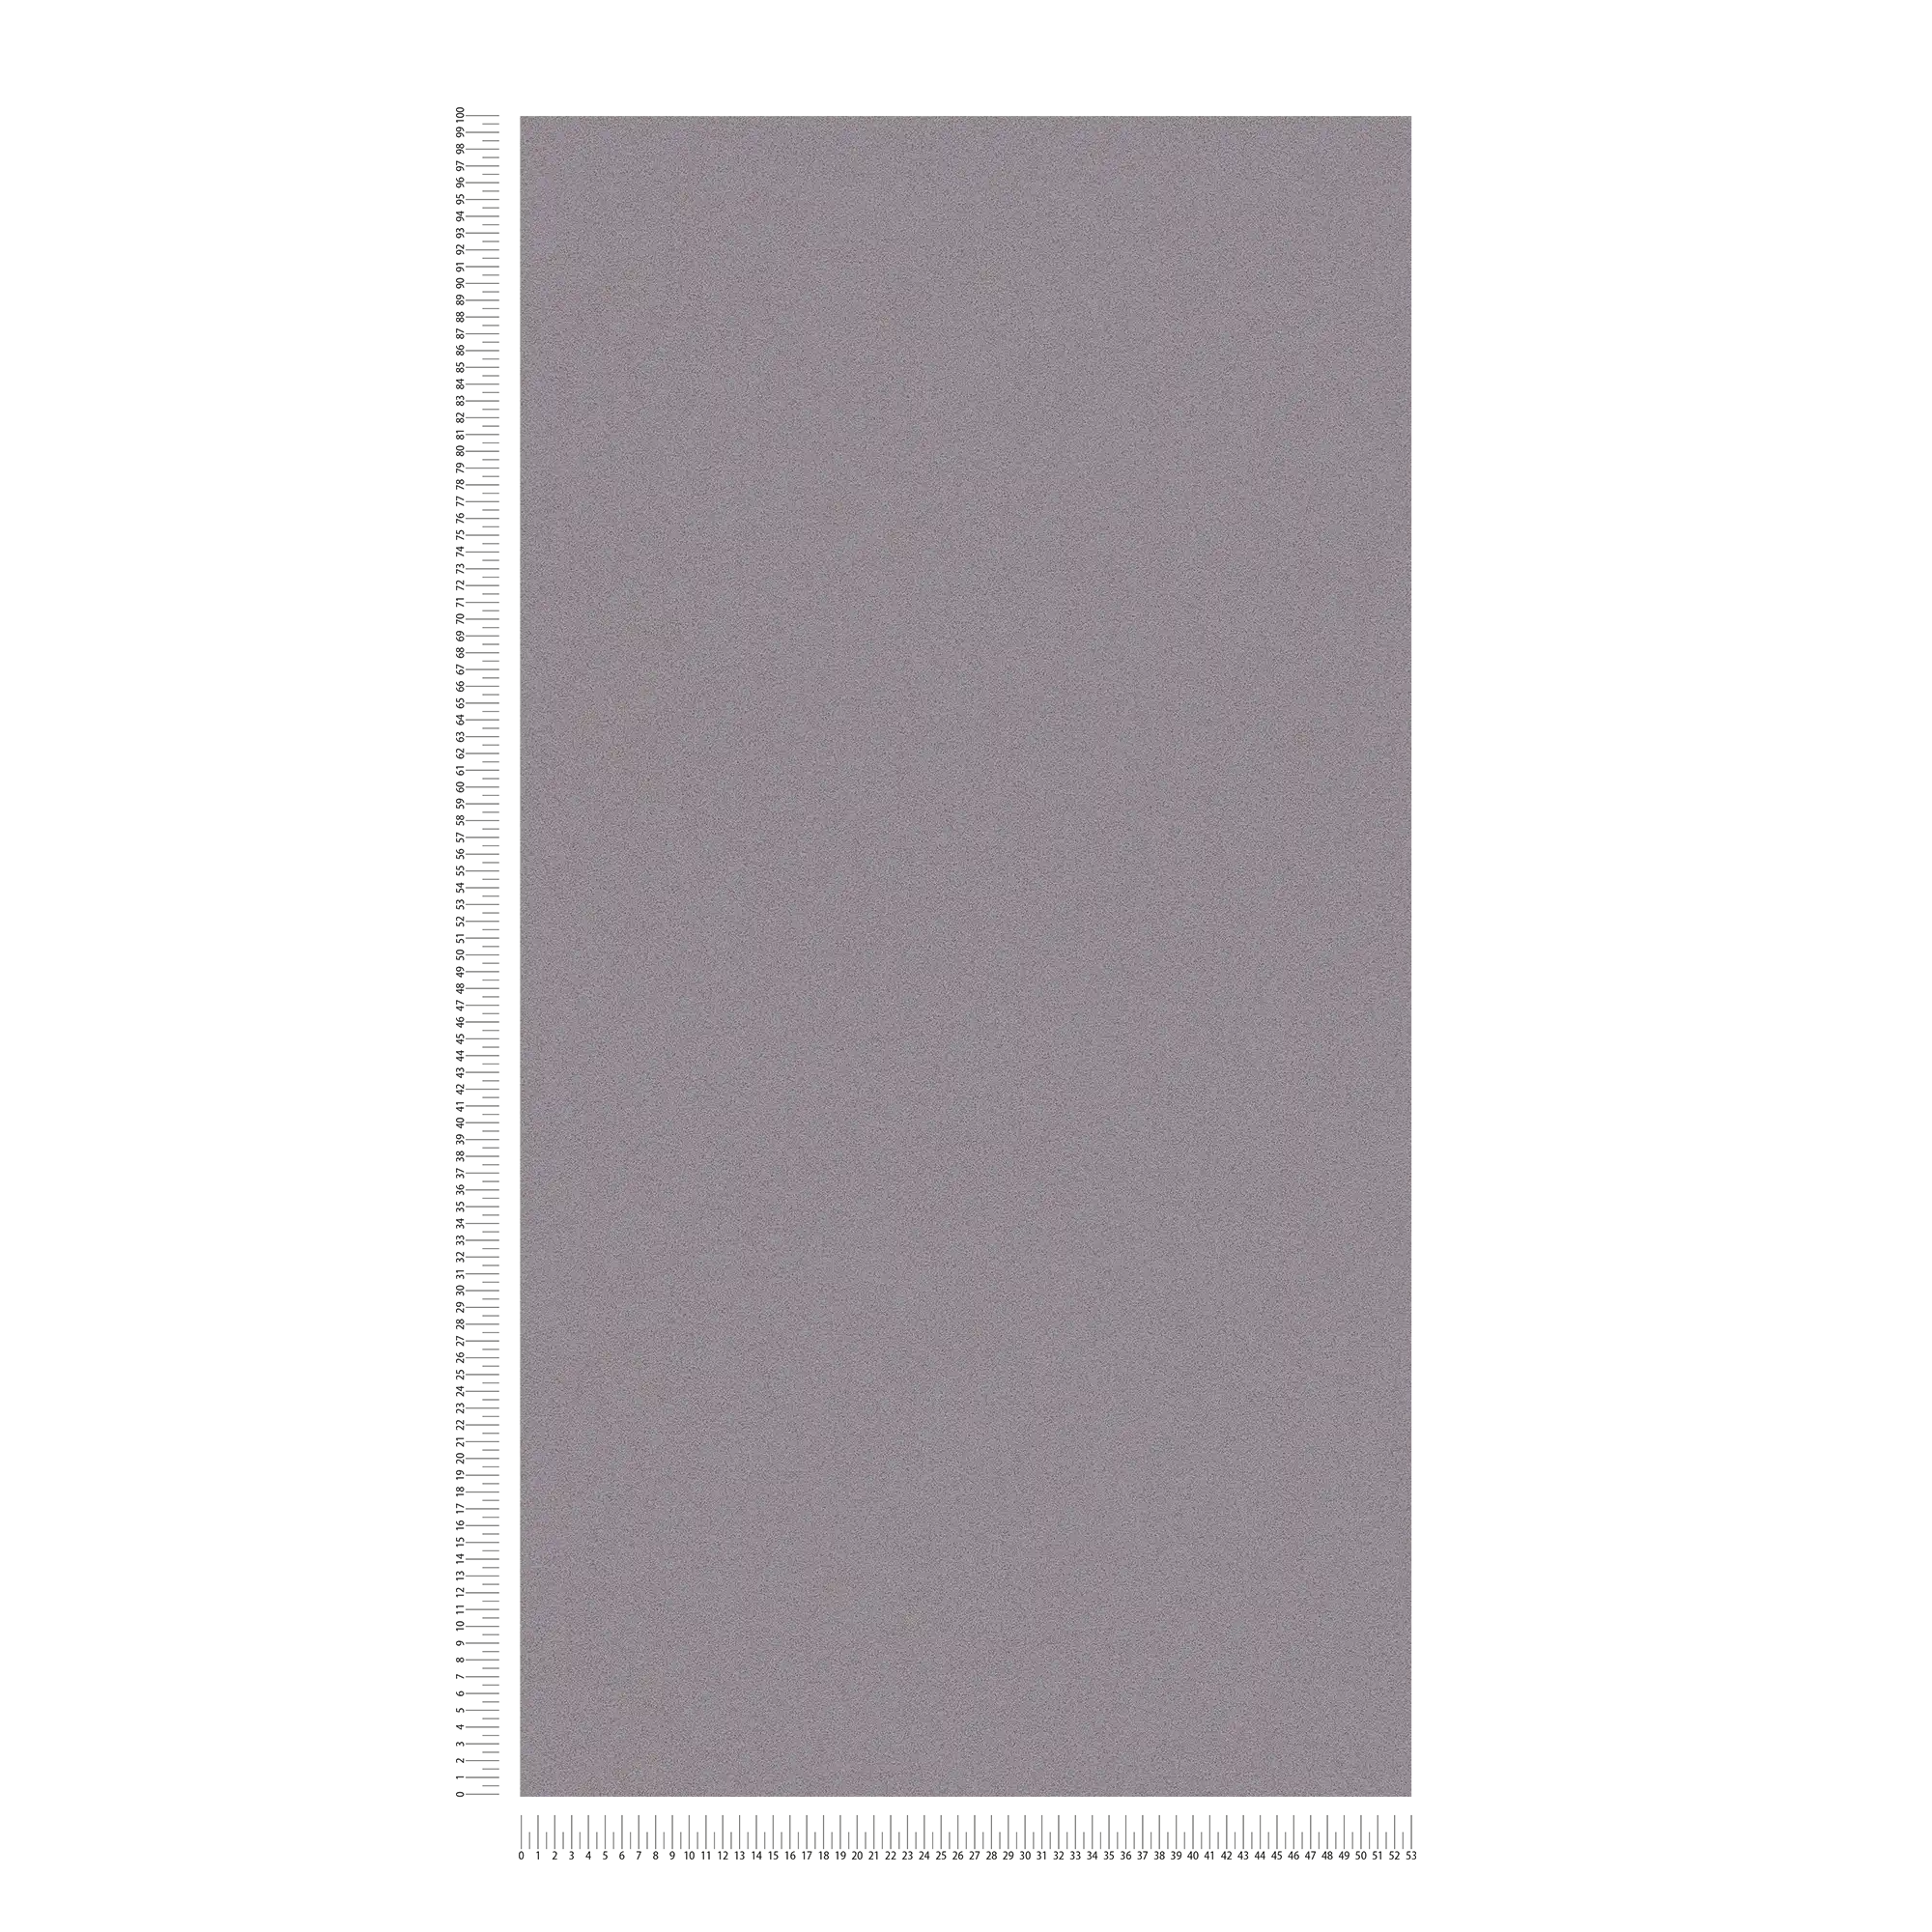             Wallpaper dove grey & matte with mottled fine plaster look
        